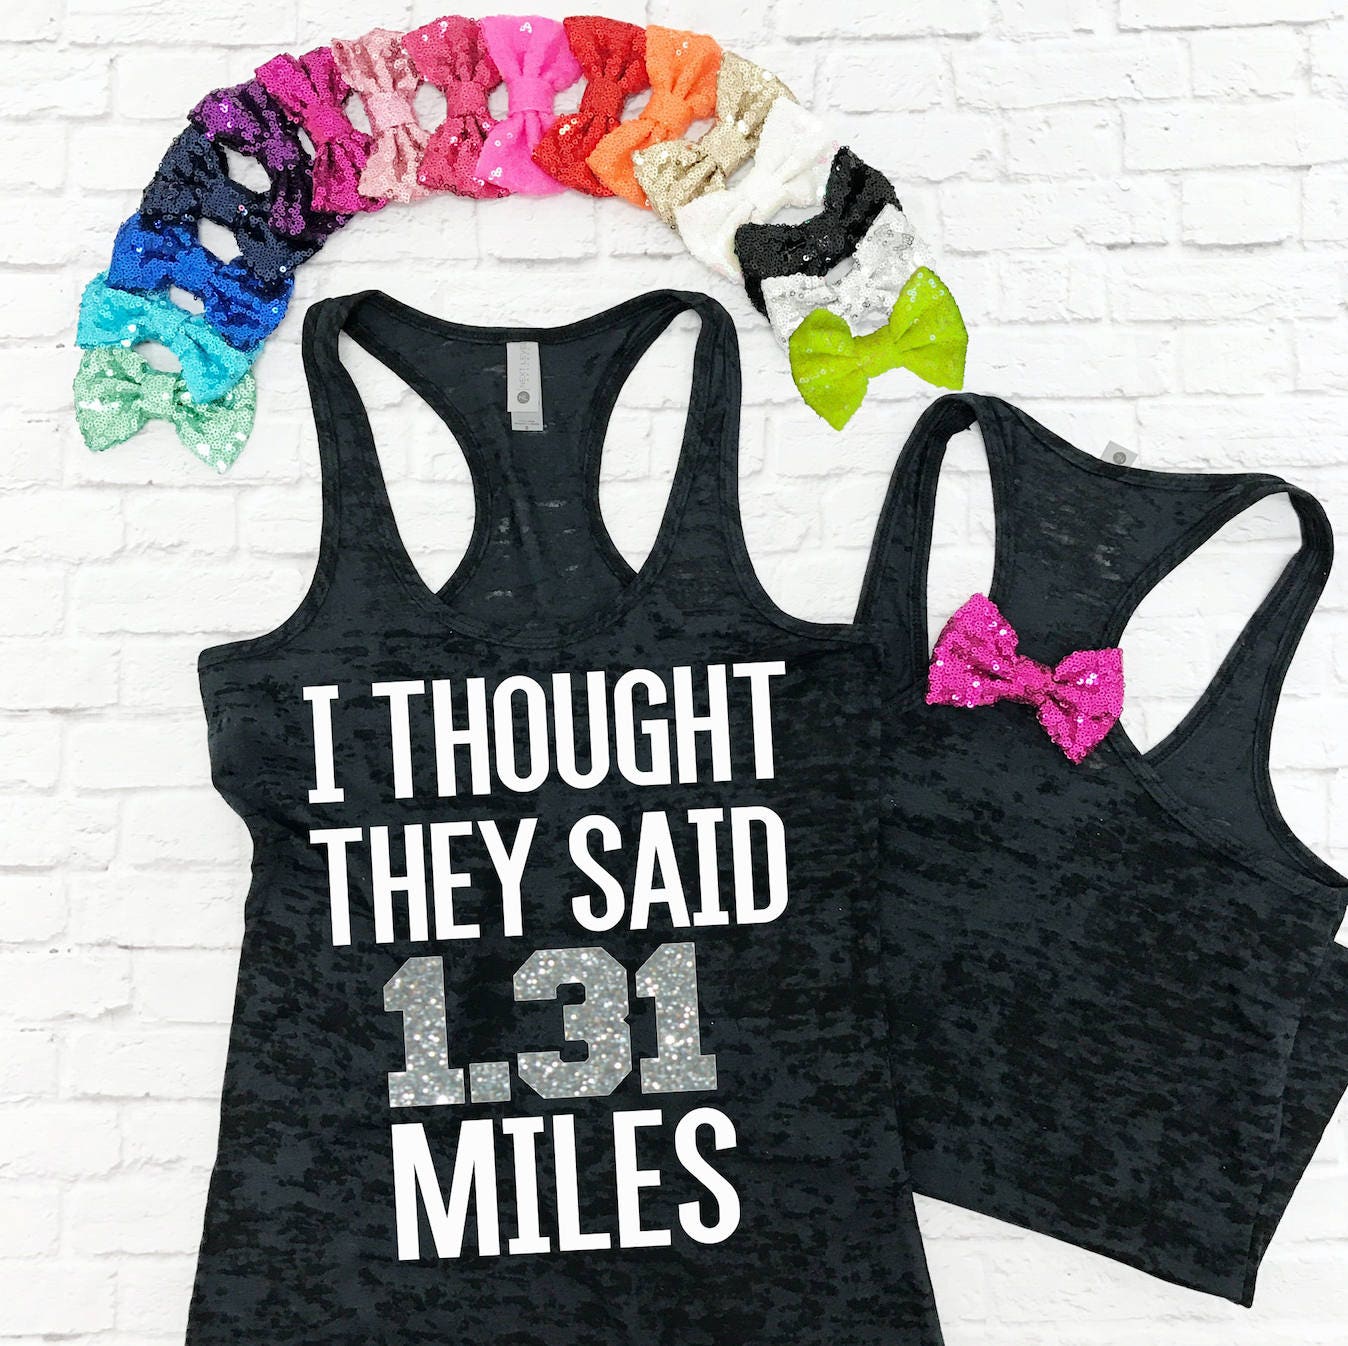 I Thought They Said 1.31 Miles - Half Marathon Burnout Tank Top. Running Shirt. Funny Marathon Tank. Gym Shirt. Burnout Half Marathon Shirt.